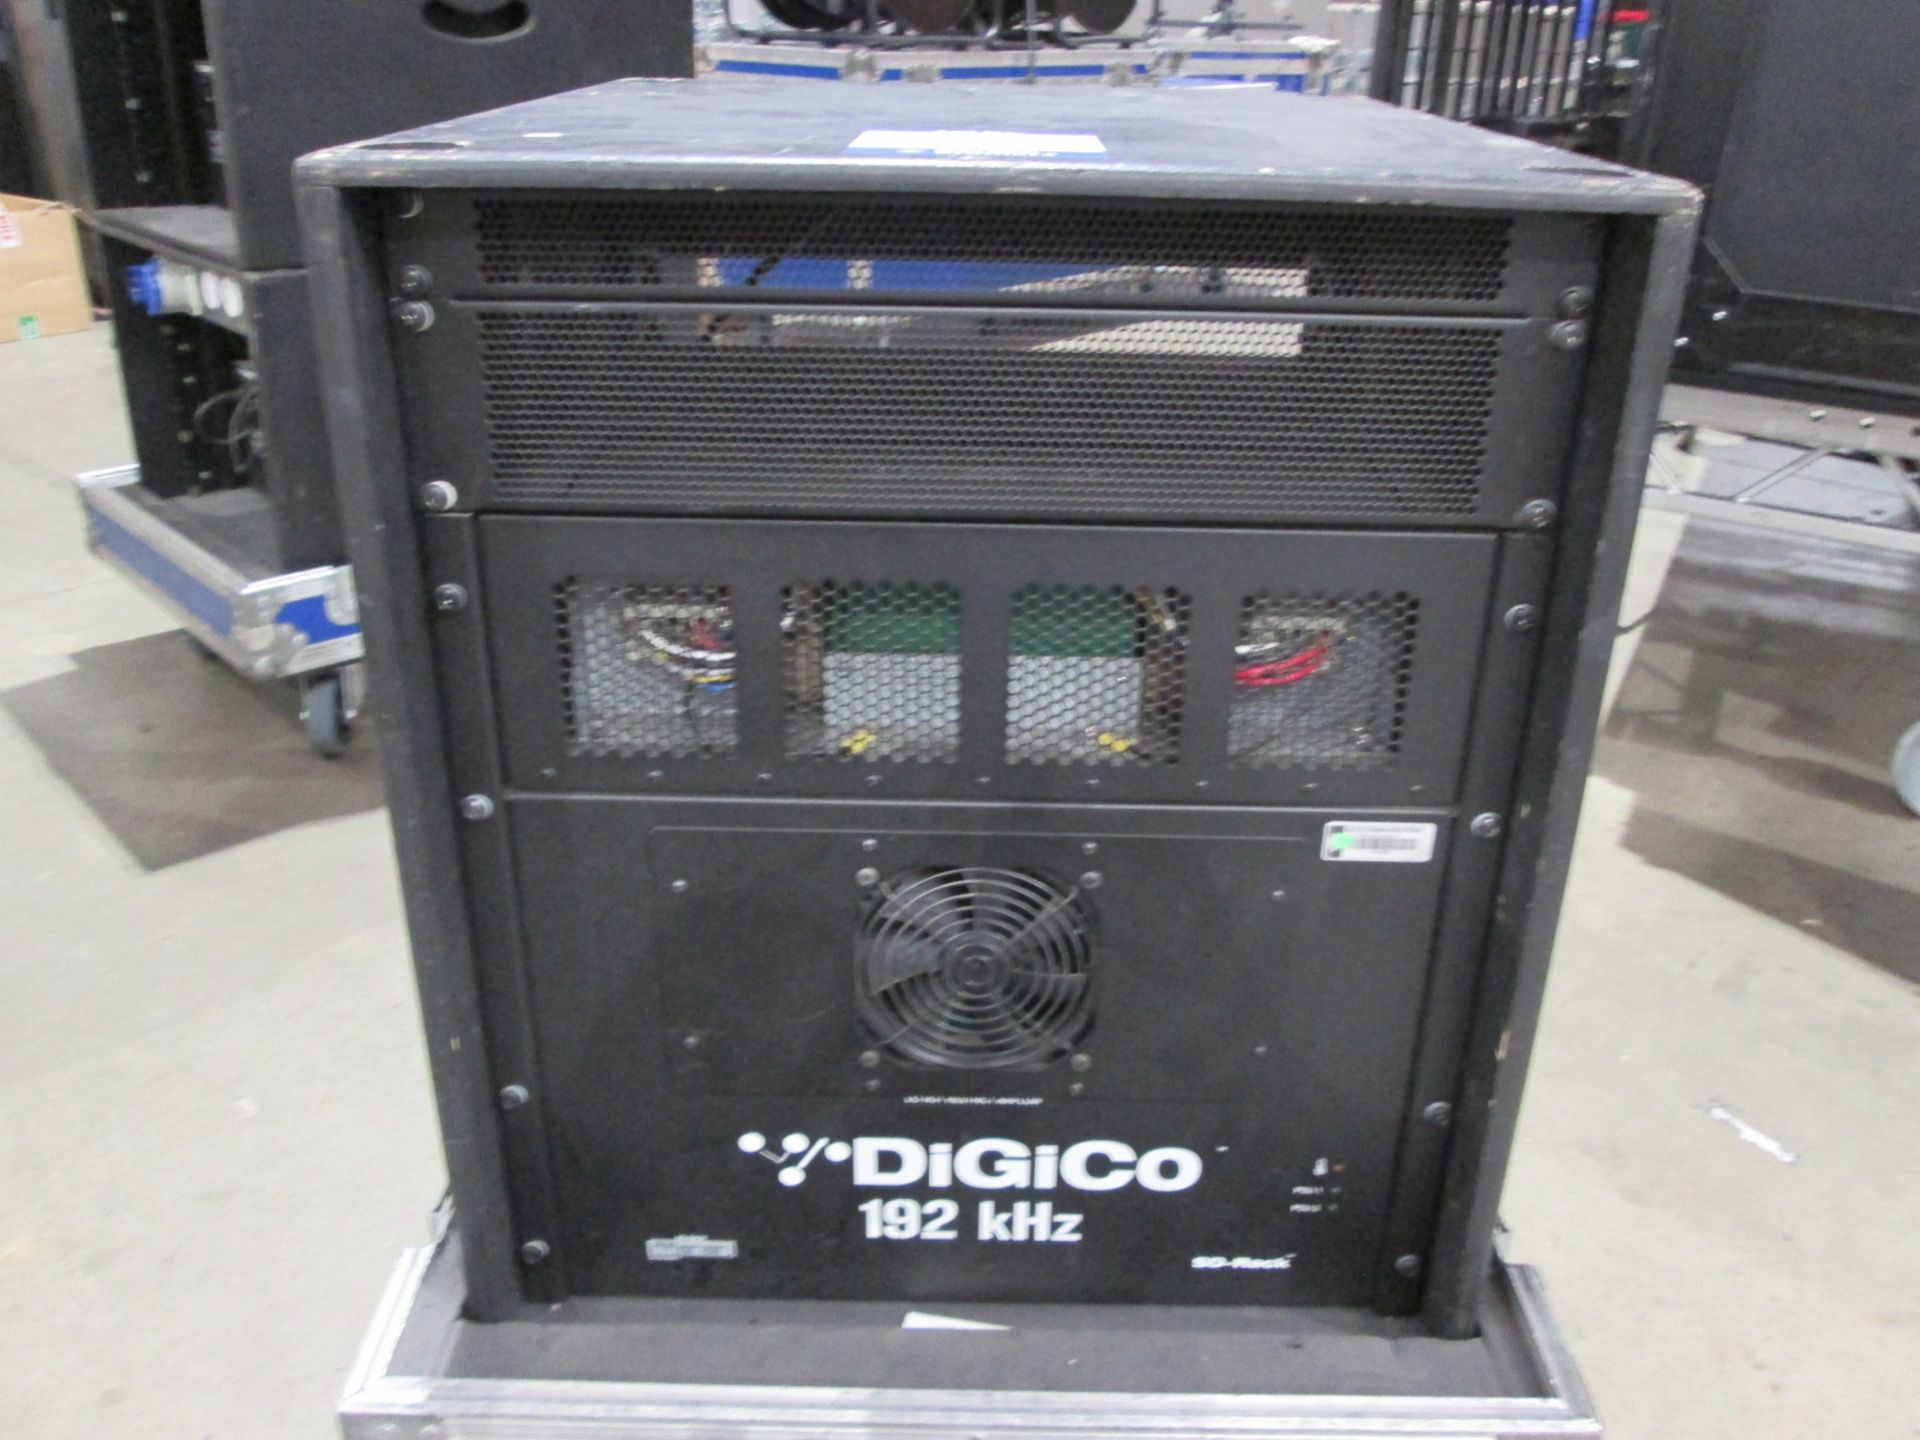 DigiCo 192 kHz SD-Rack Digital Input / Output Frame. S/N 771836 1506